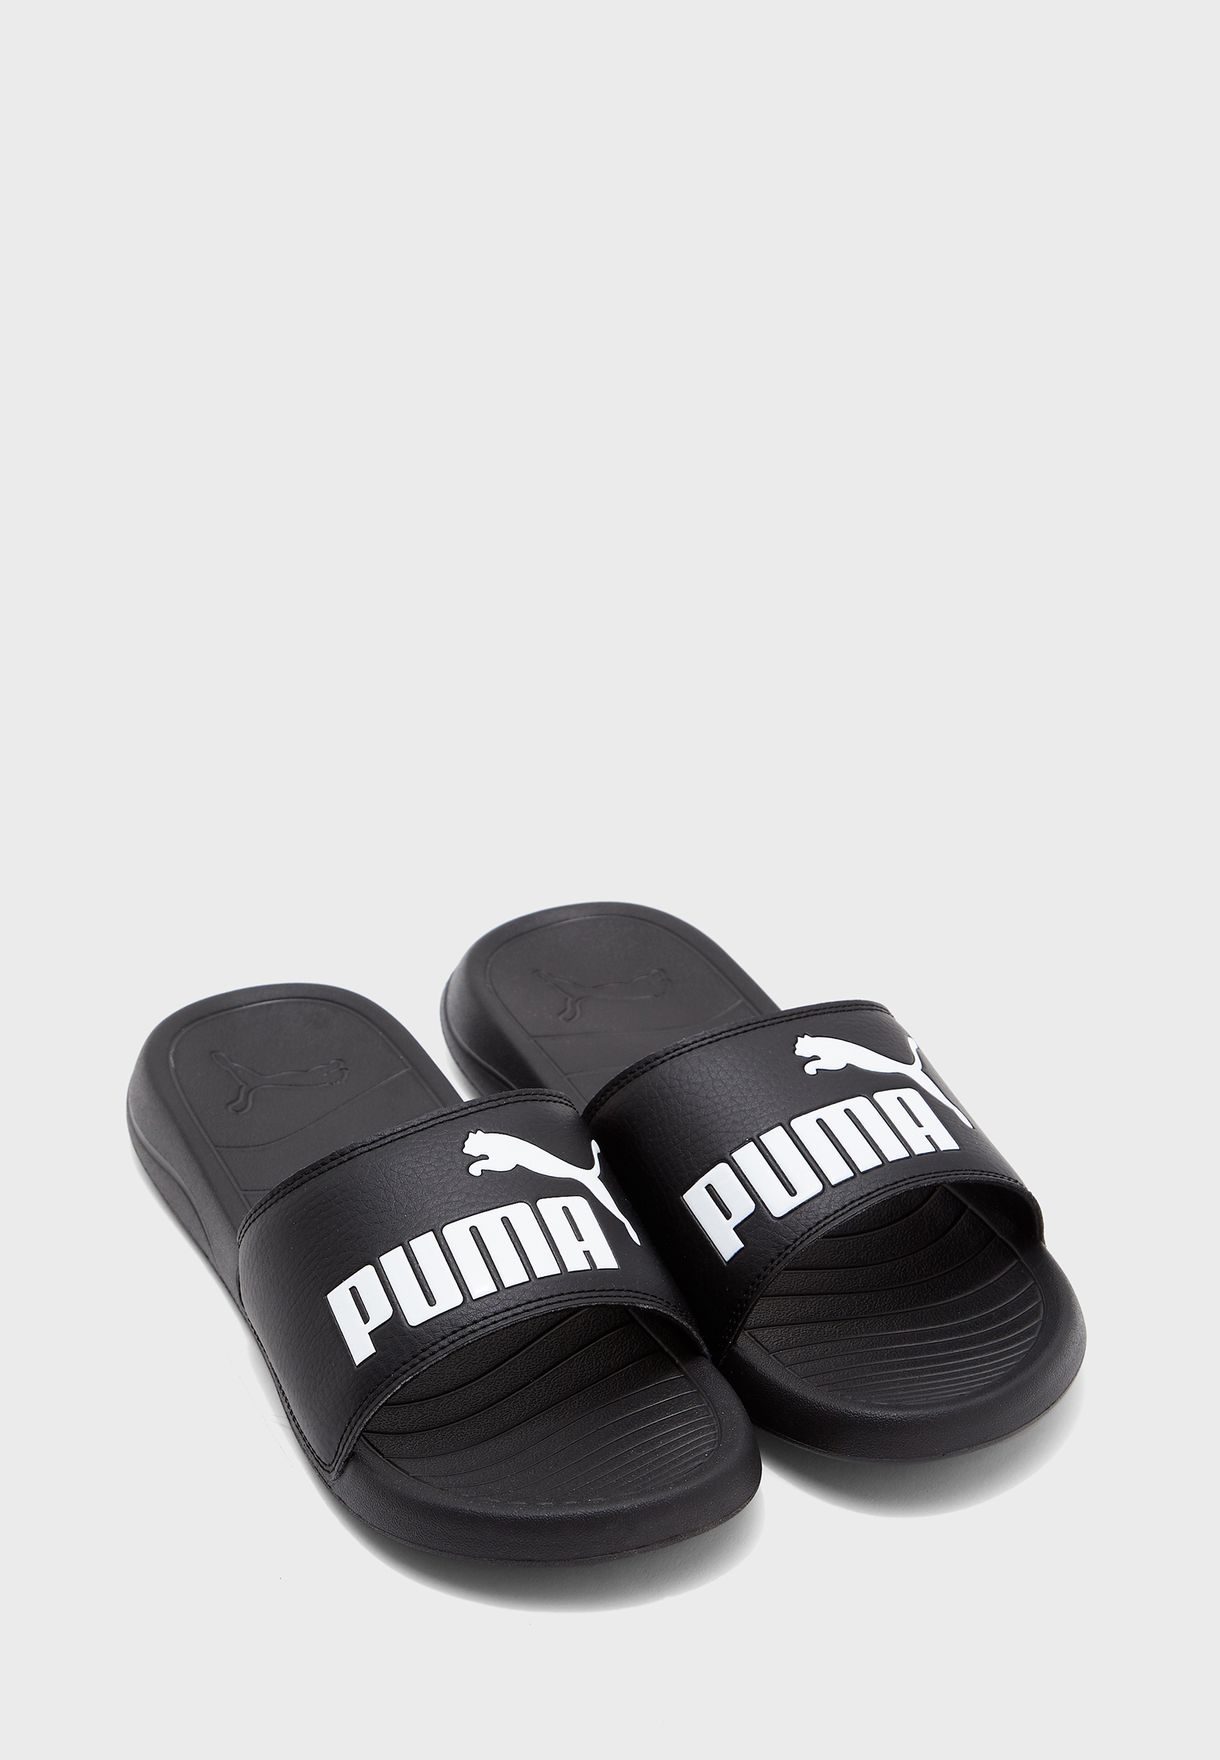 puma black label flip flops